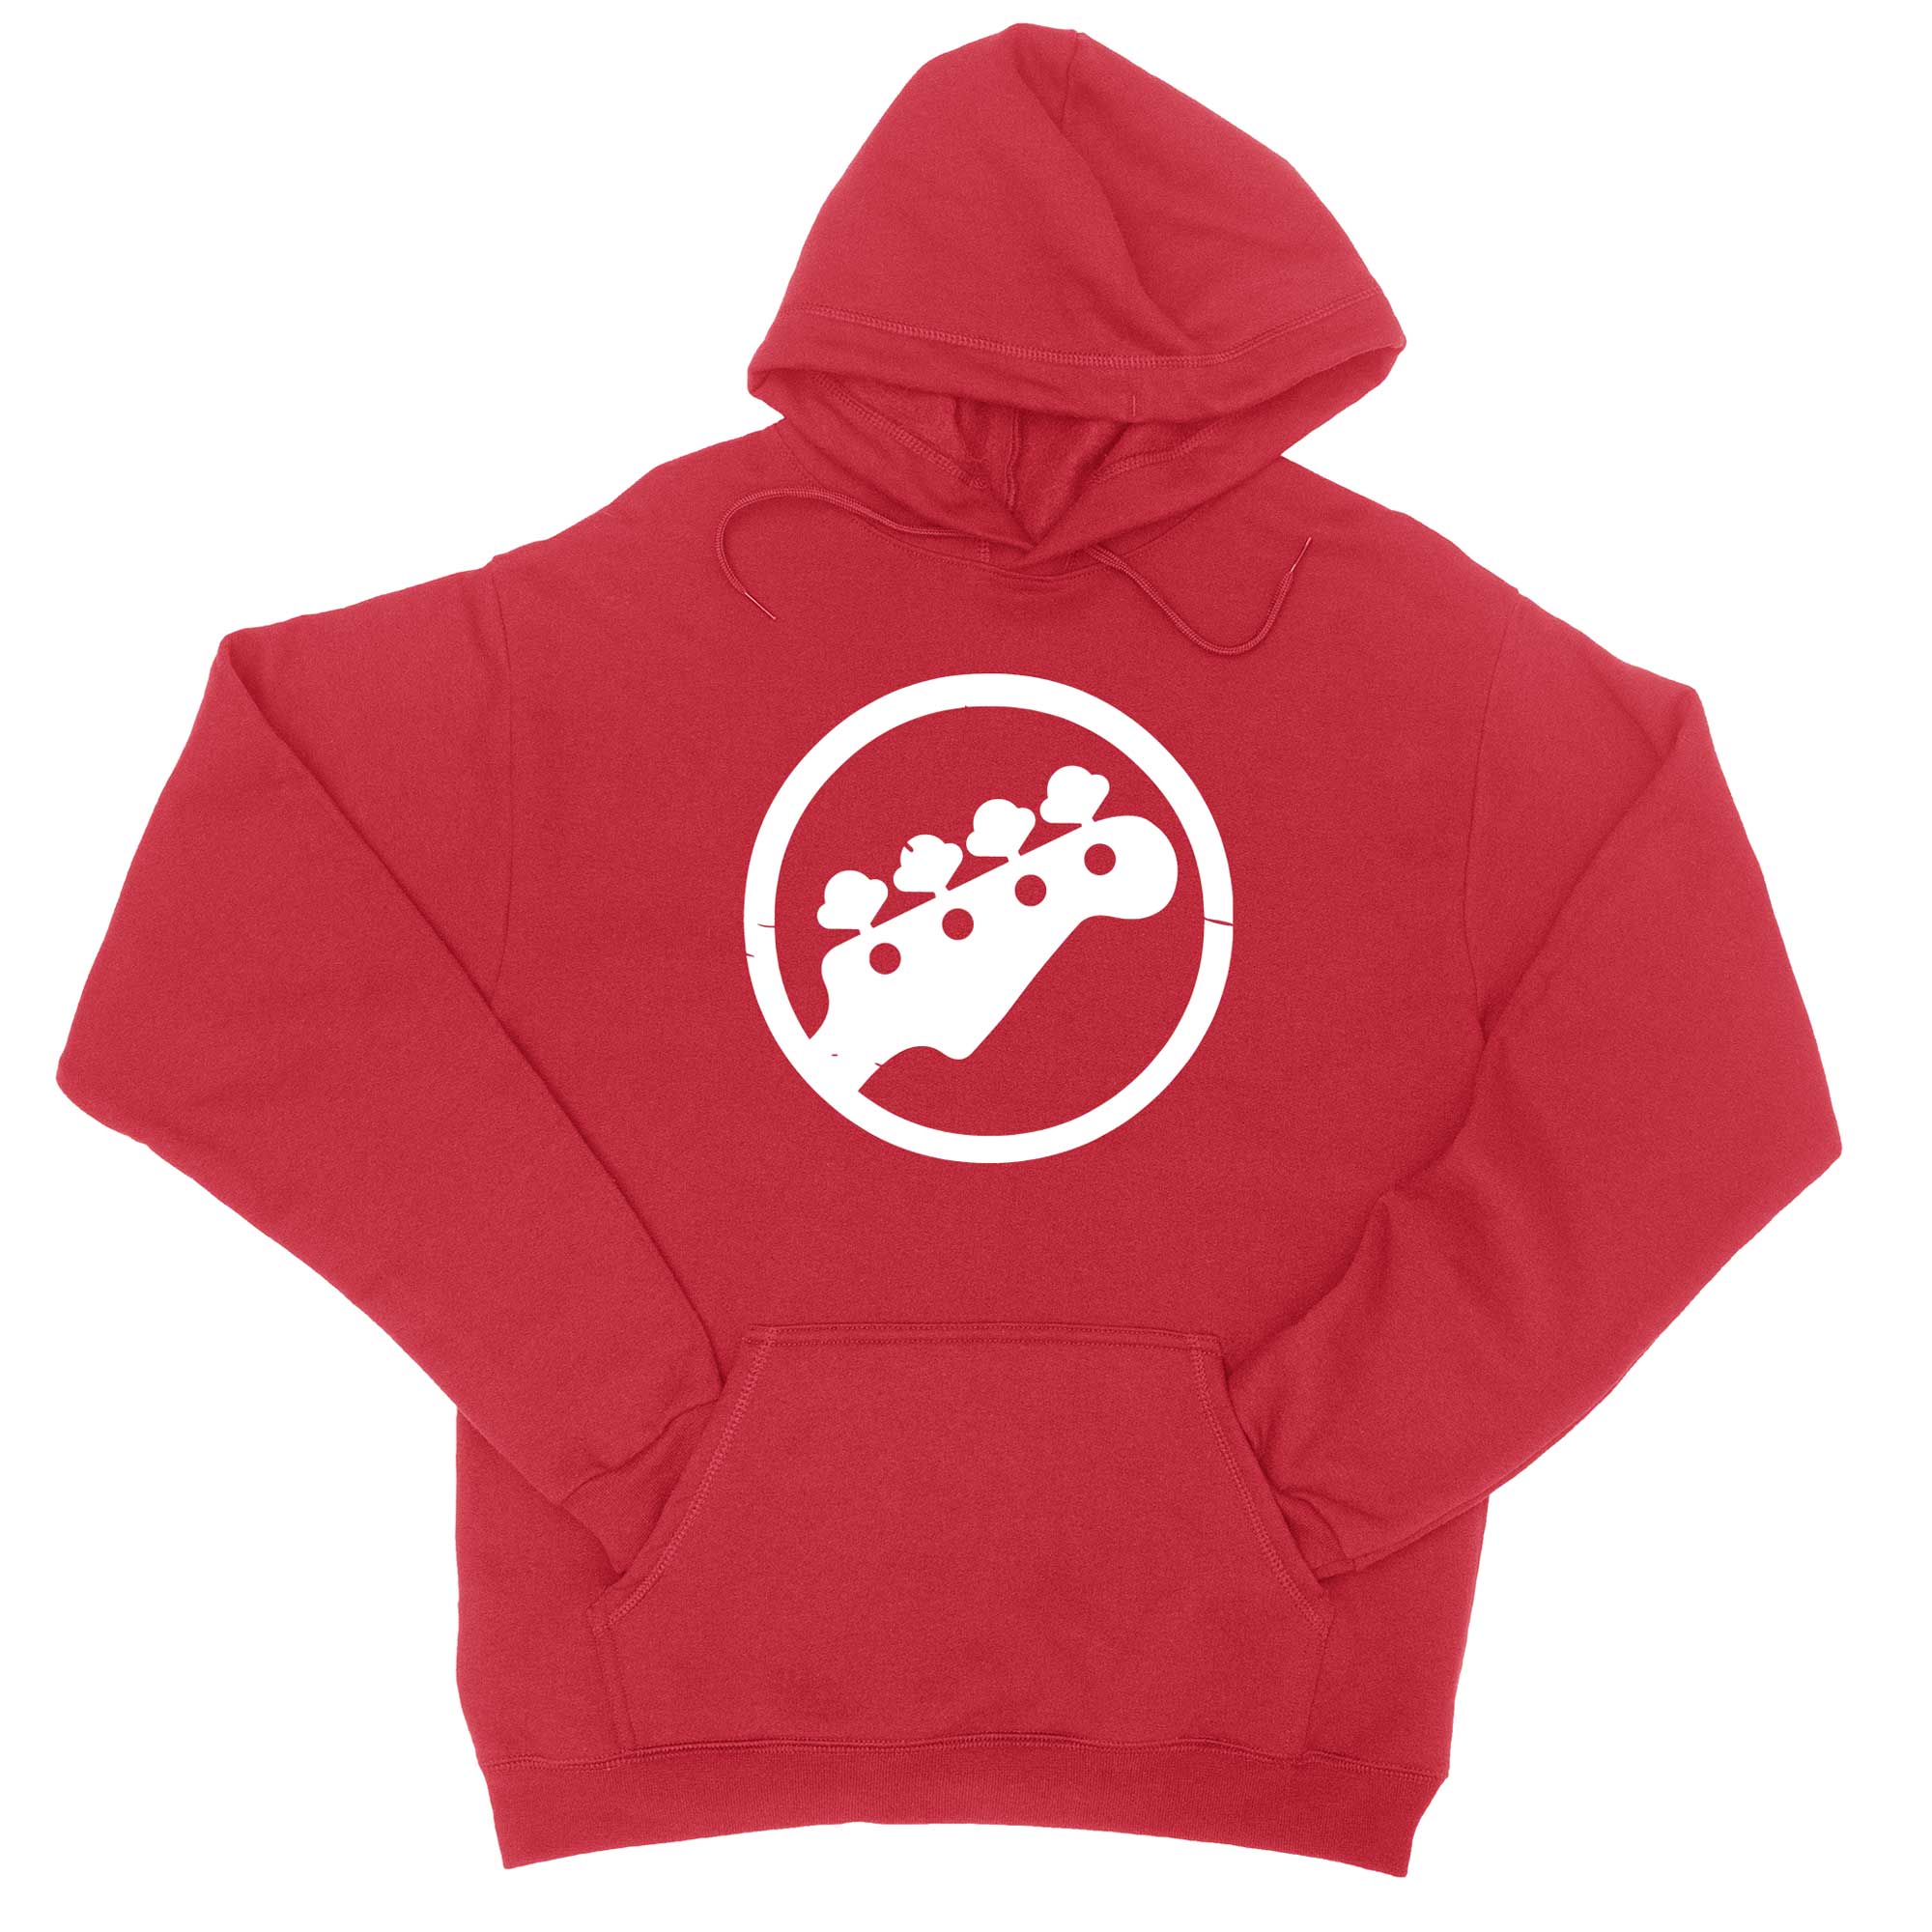 Bass Logo Hoodie Sweatshirt-Hoodies-Shirtasaurus-S-Red-Shirtasaurus